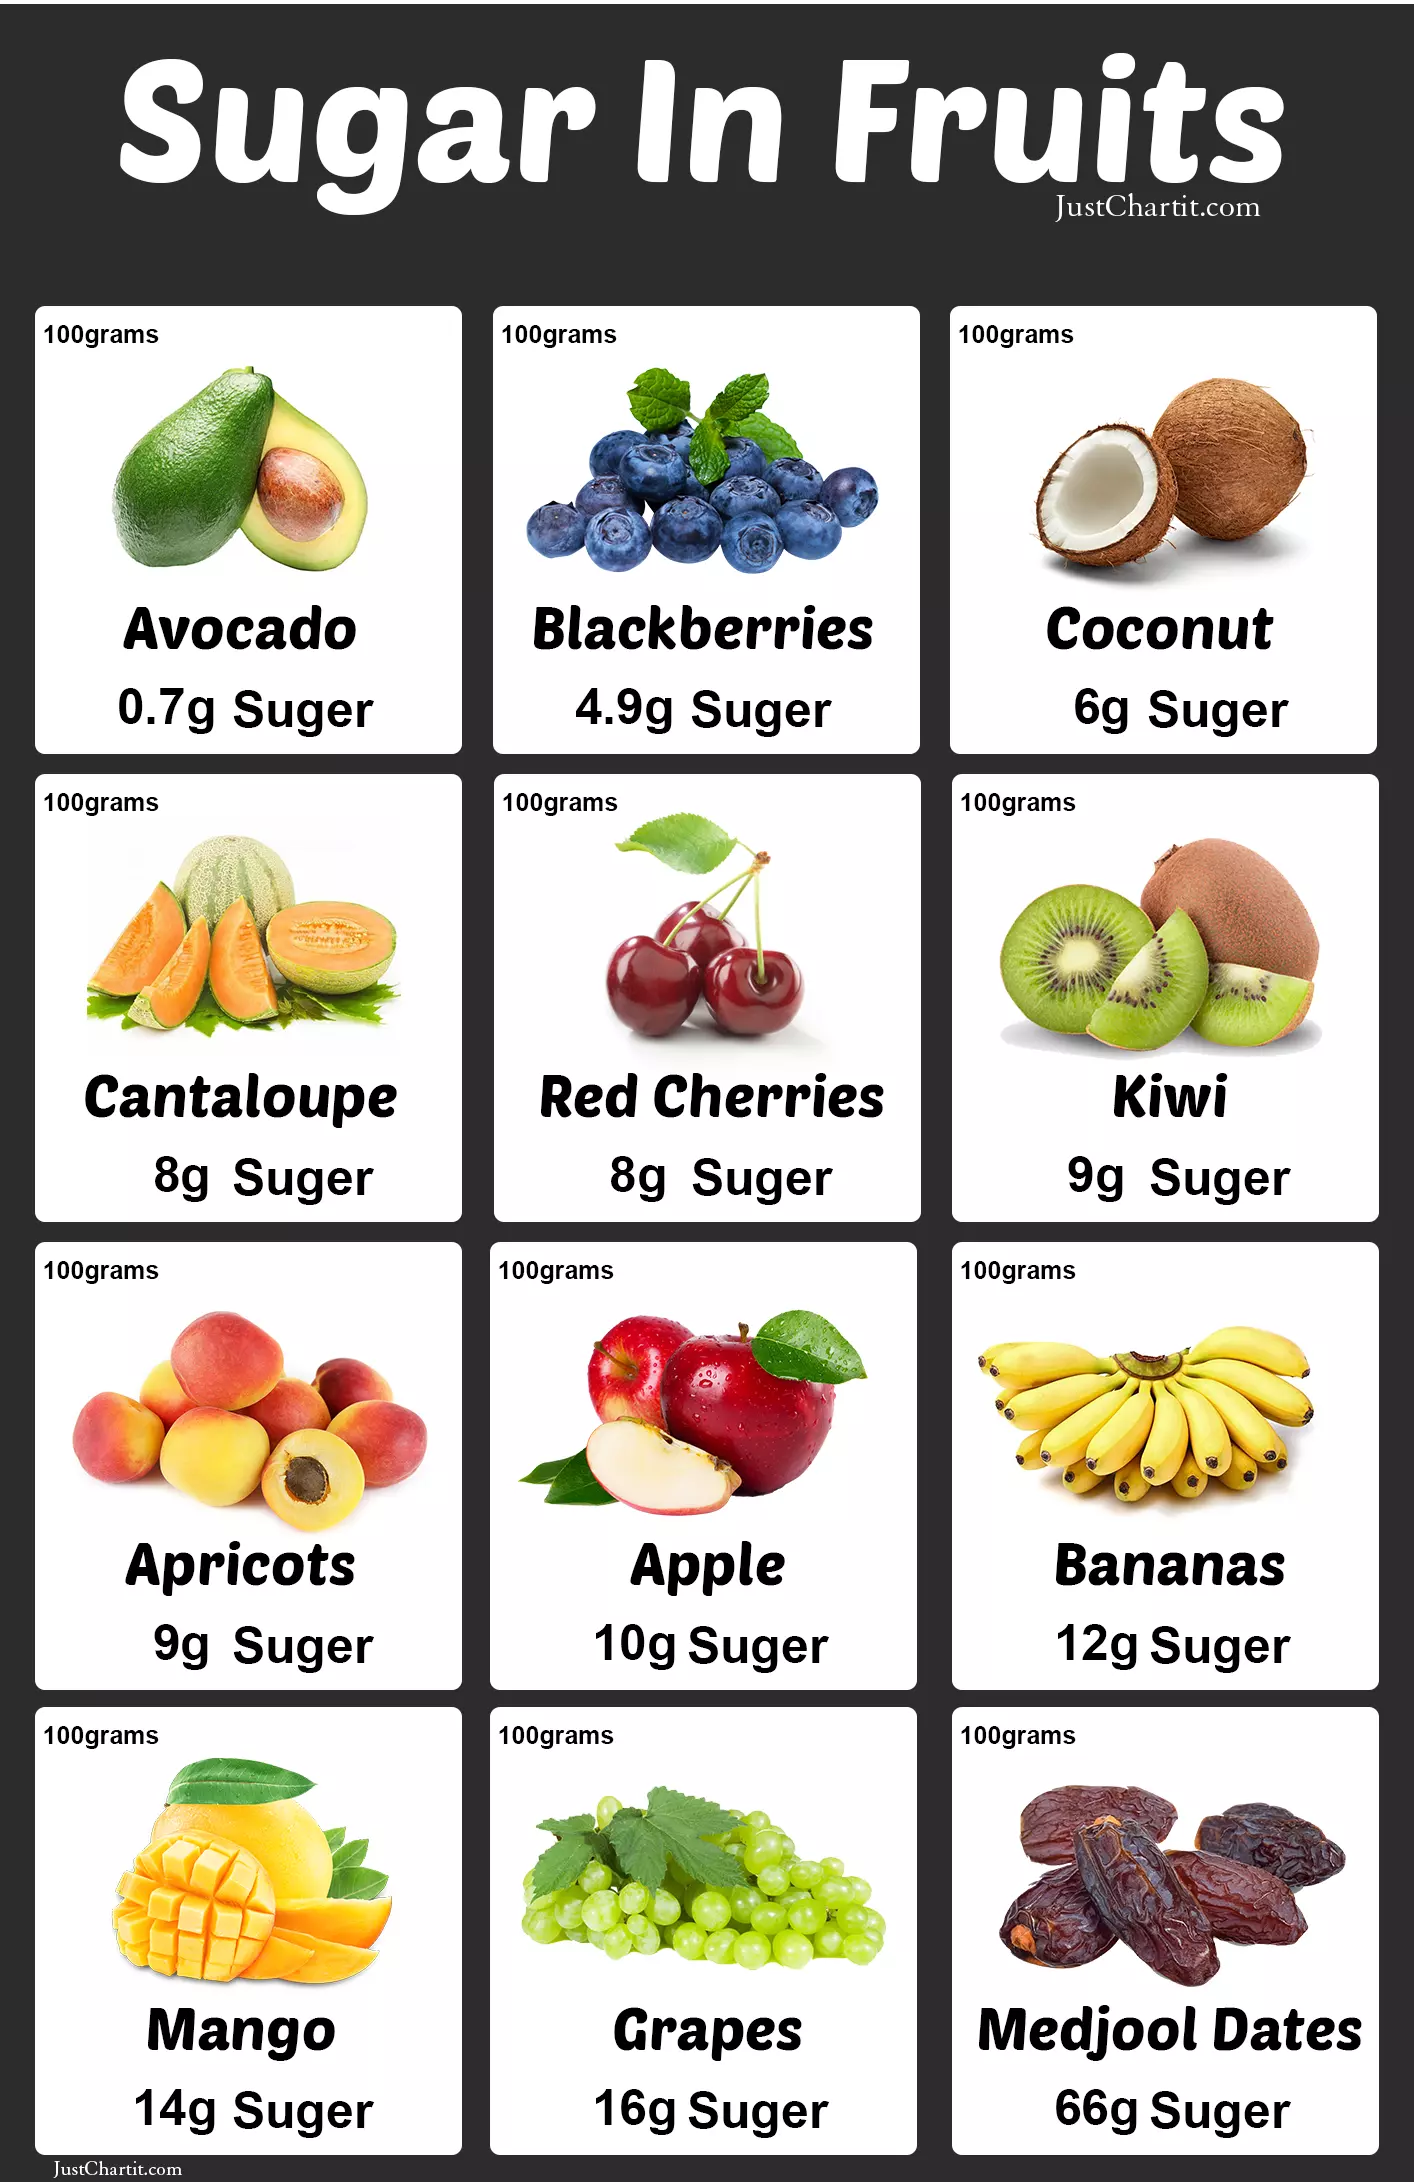 Sugar in fruits chart